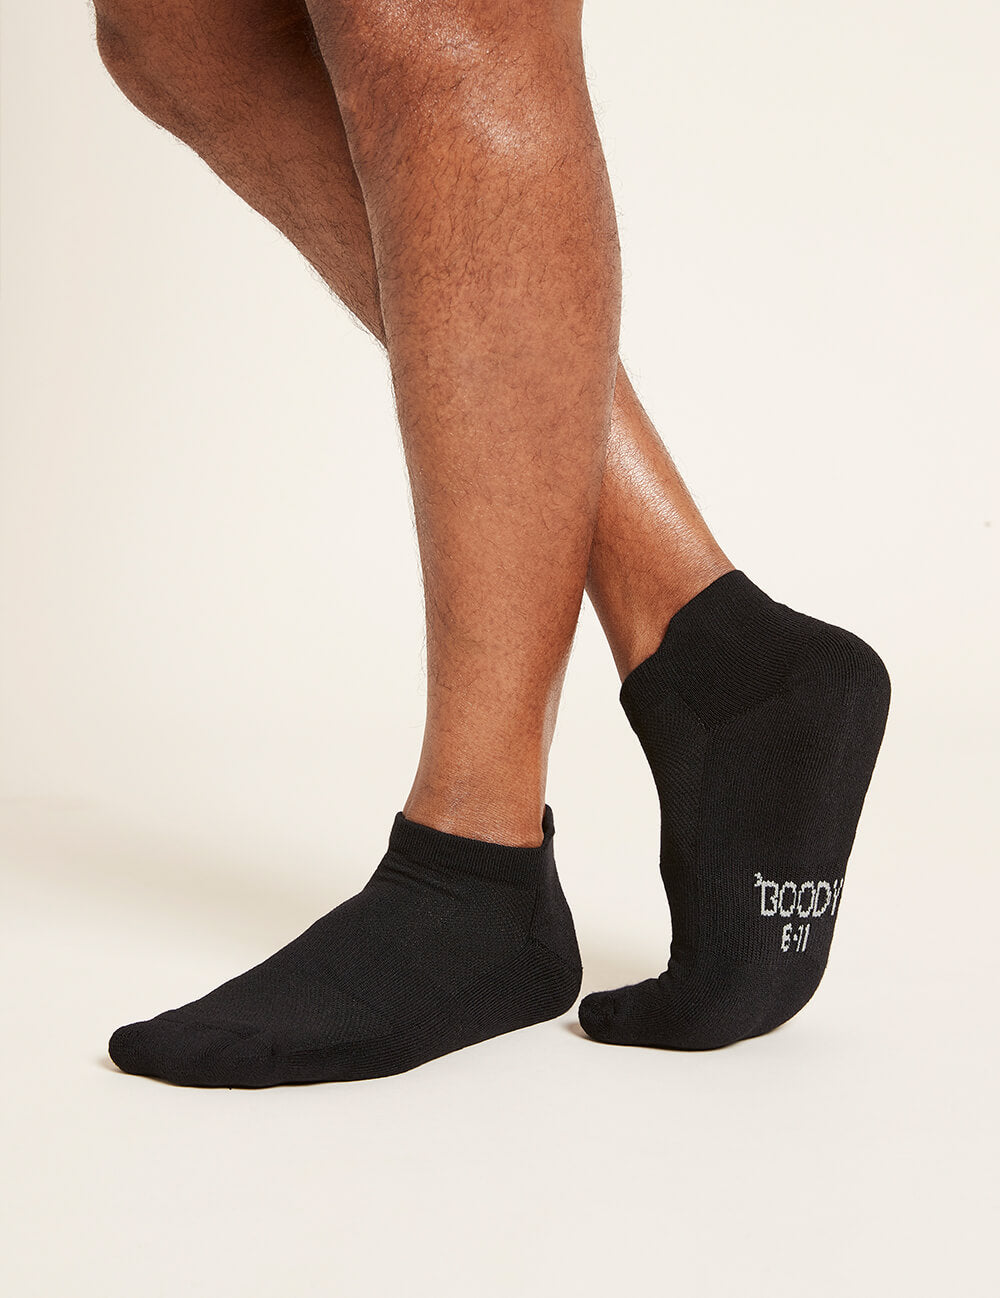 Boody Men's Sport Ankle Socks Black Side 2